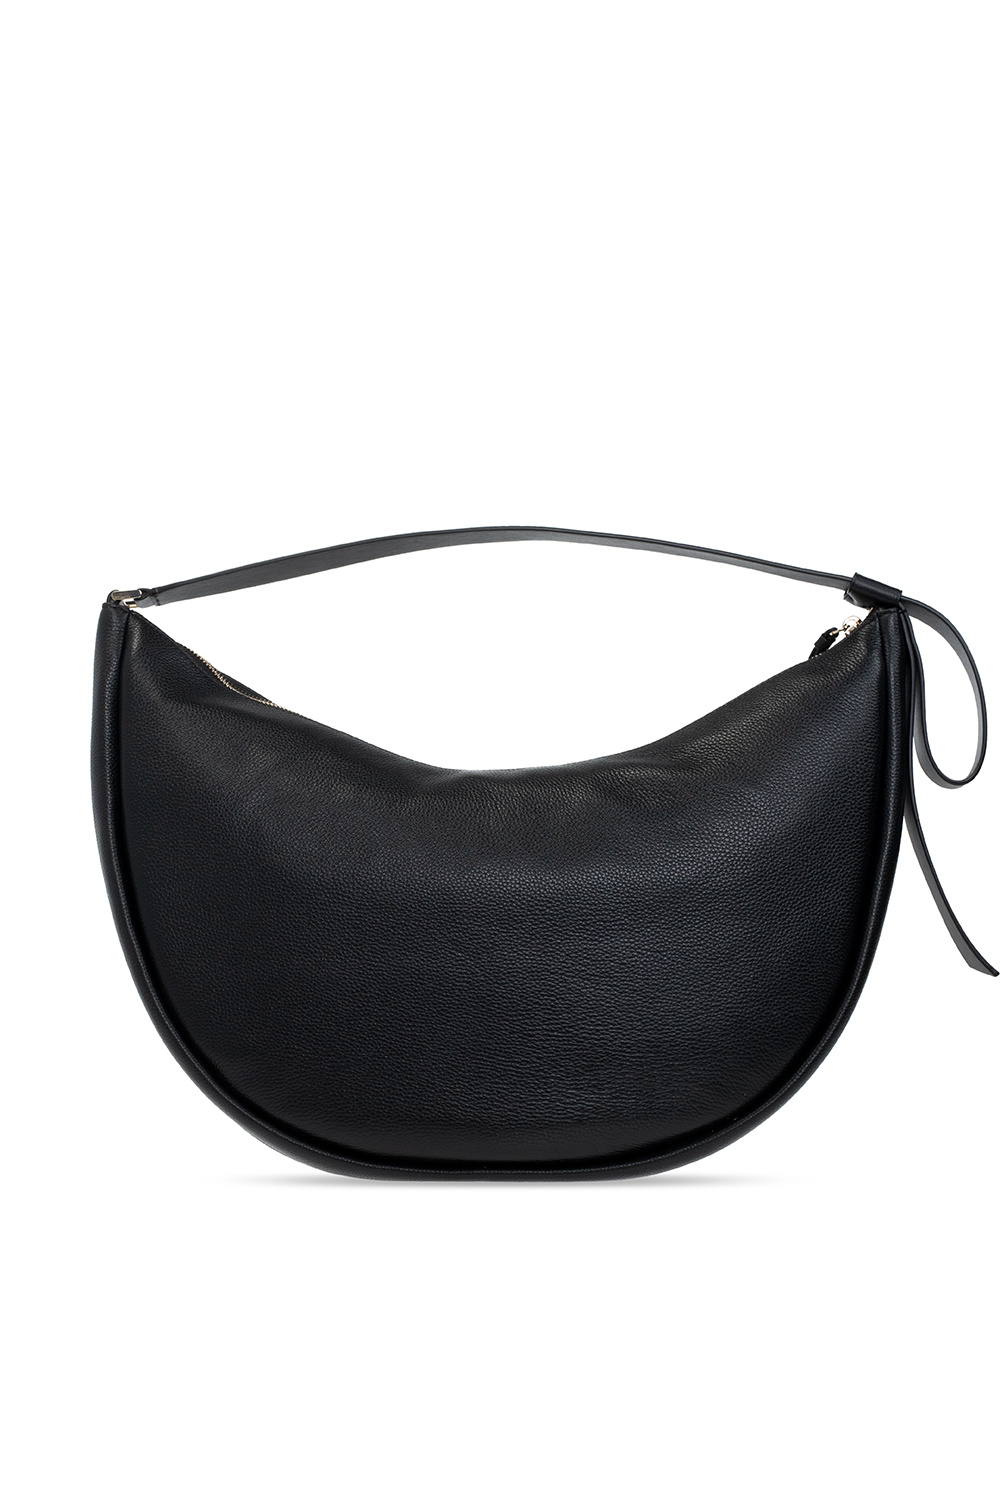 Louis Vuitton pre-owned Alma PM Day bag Rot - Black 'Smile Large' shoulder  Day bag Kate Spade - IetpShops GB